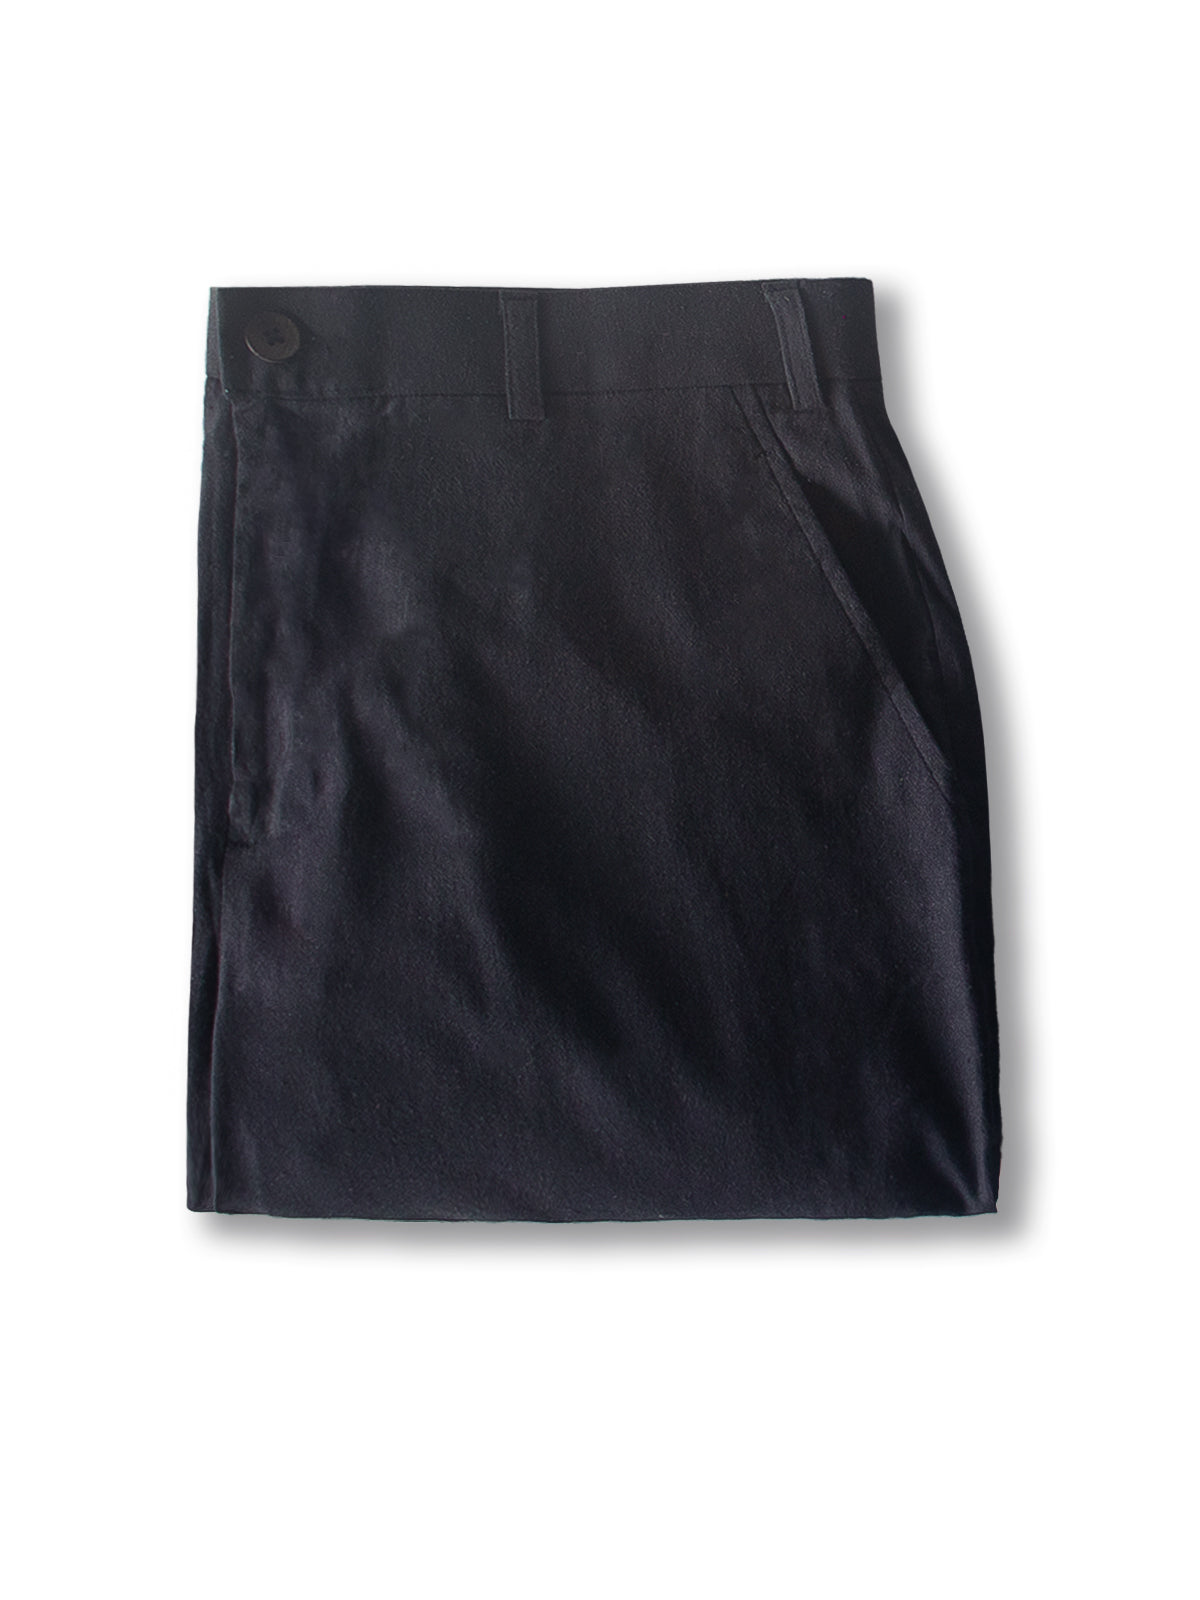 Bombay Black- Kala Cotton Trousers